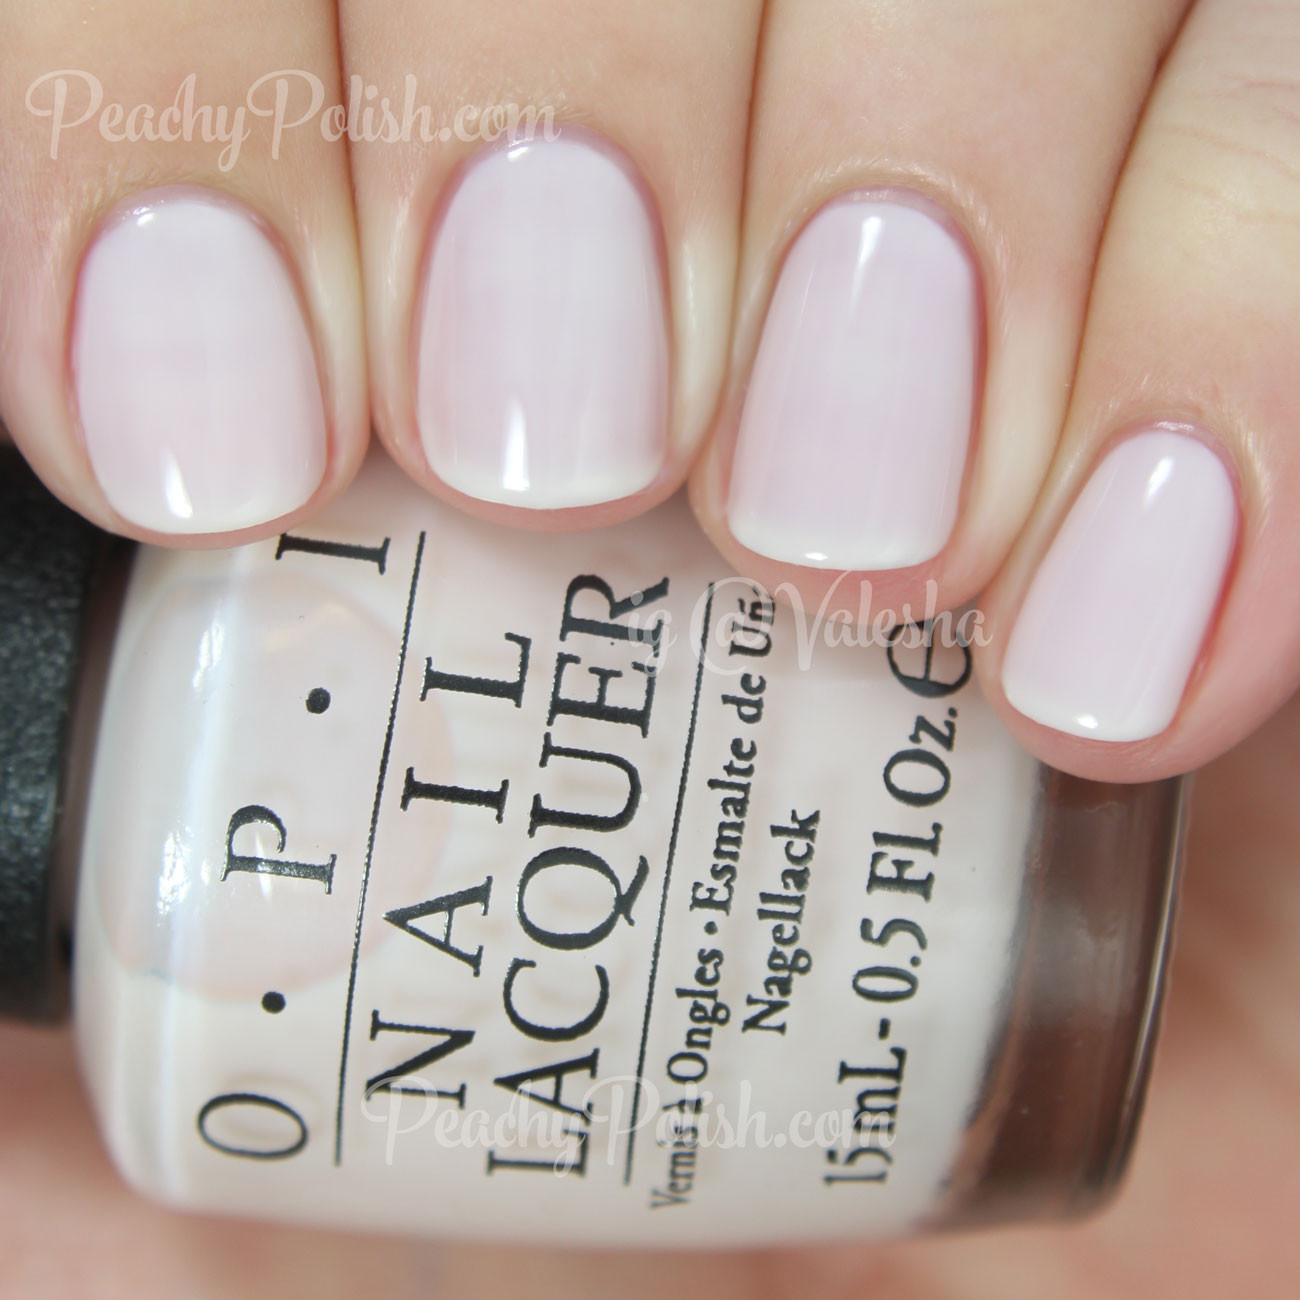 Pale Nail Colors
 OPI Soft Shades 2015 Swatches & Review Peachy Polish